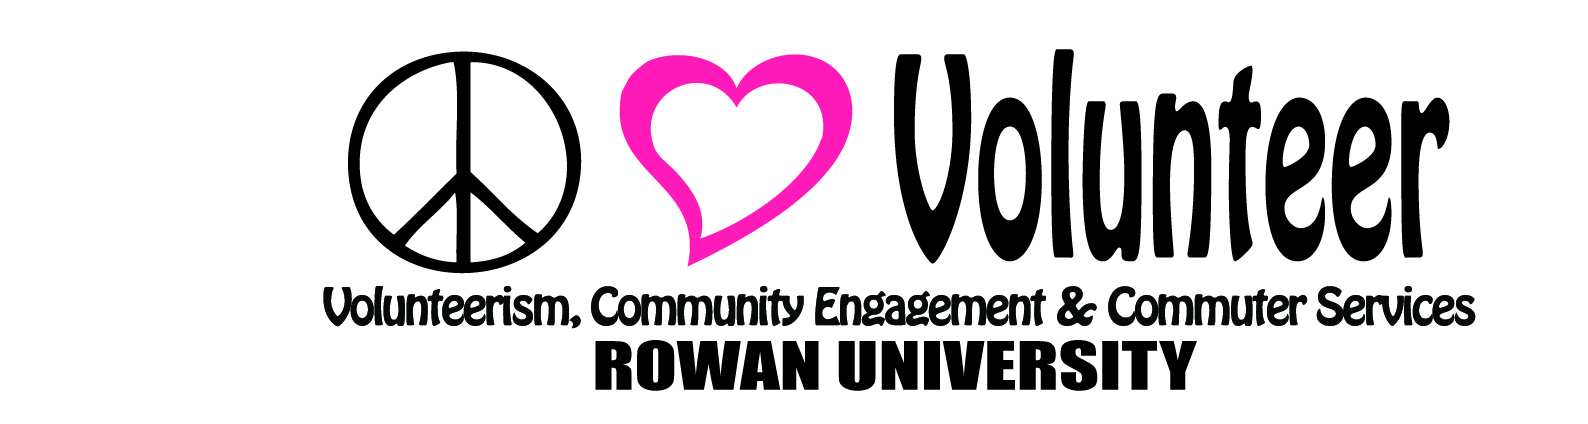 Peace-Love-Volunteer logo 